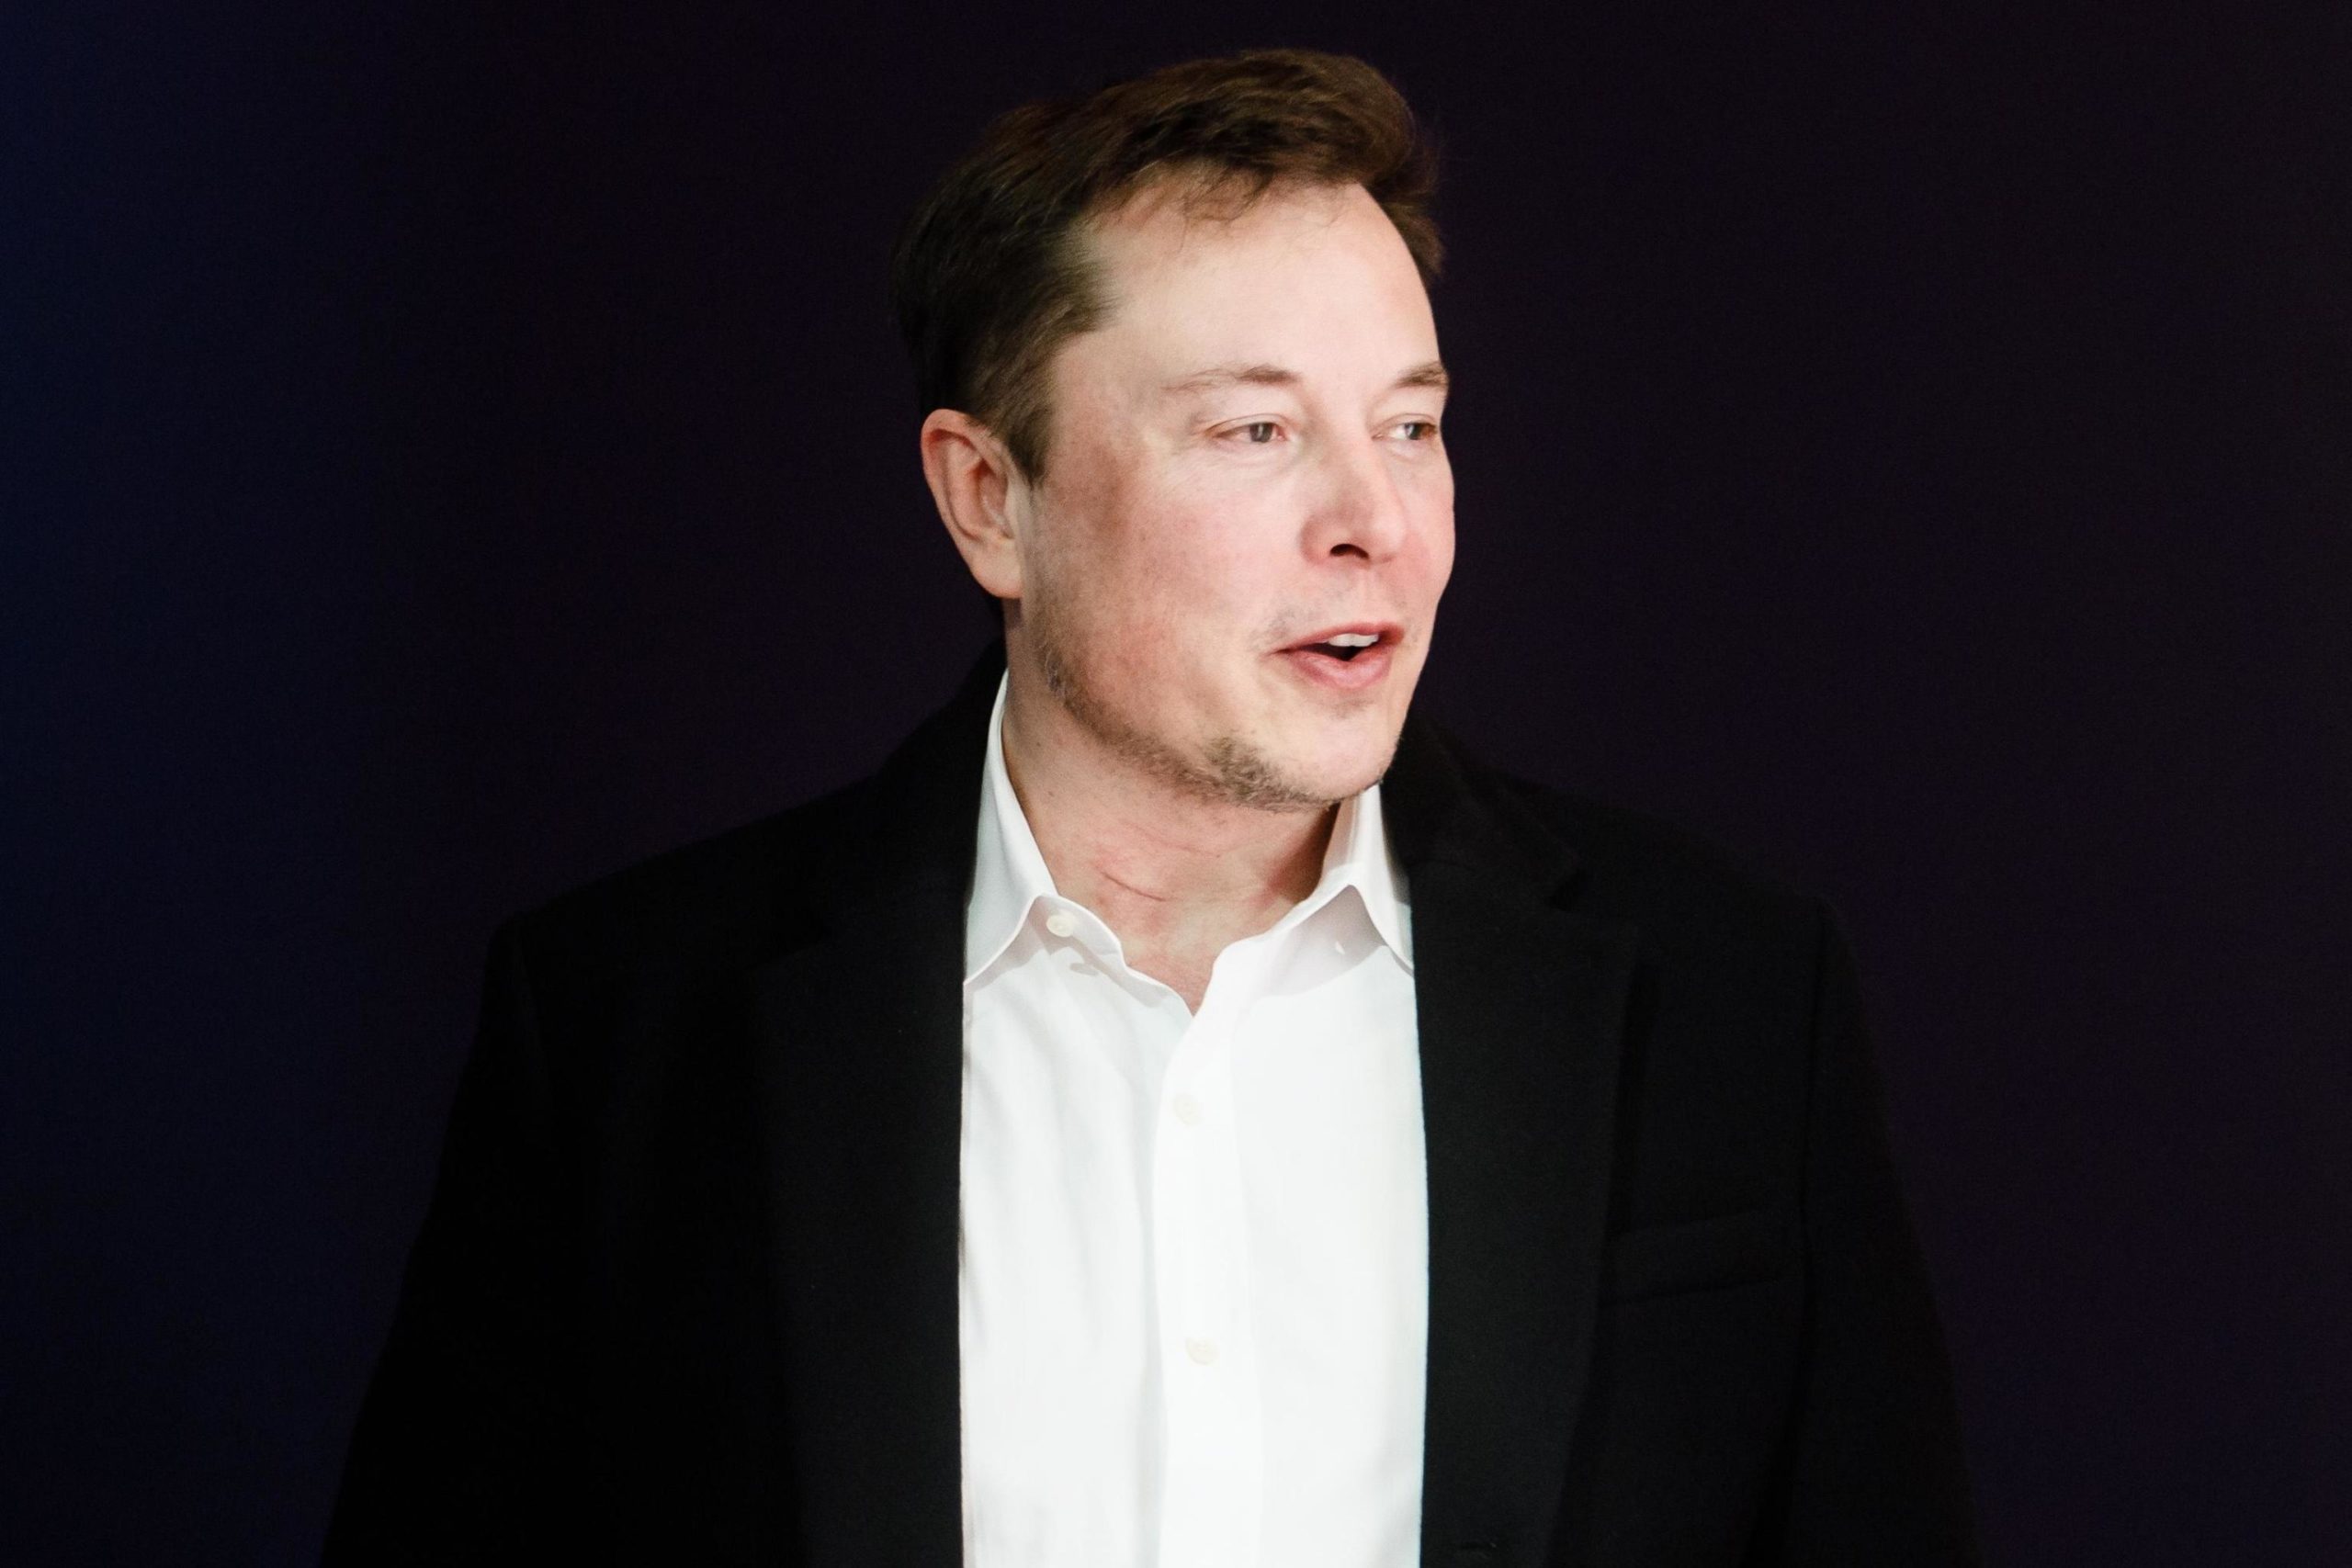 Musk replica al Wall Street Journal: “niente droga negli ultimi tre anni”